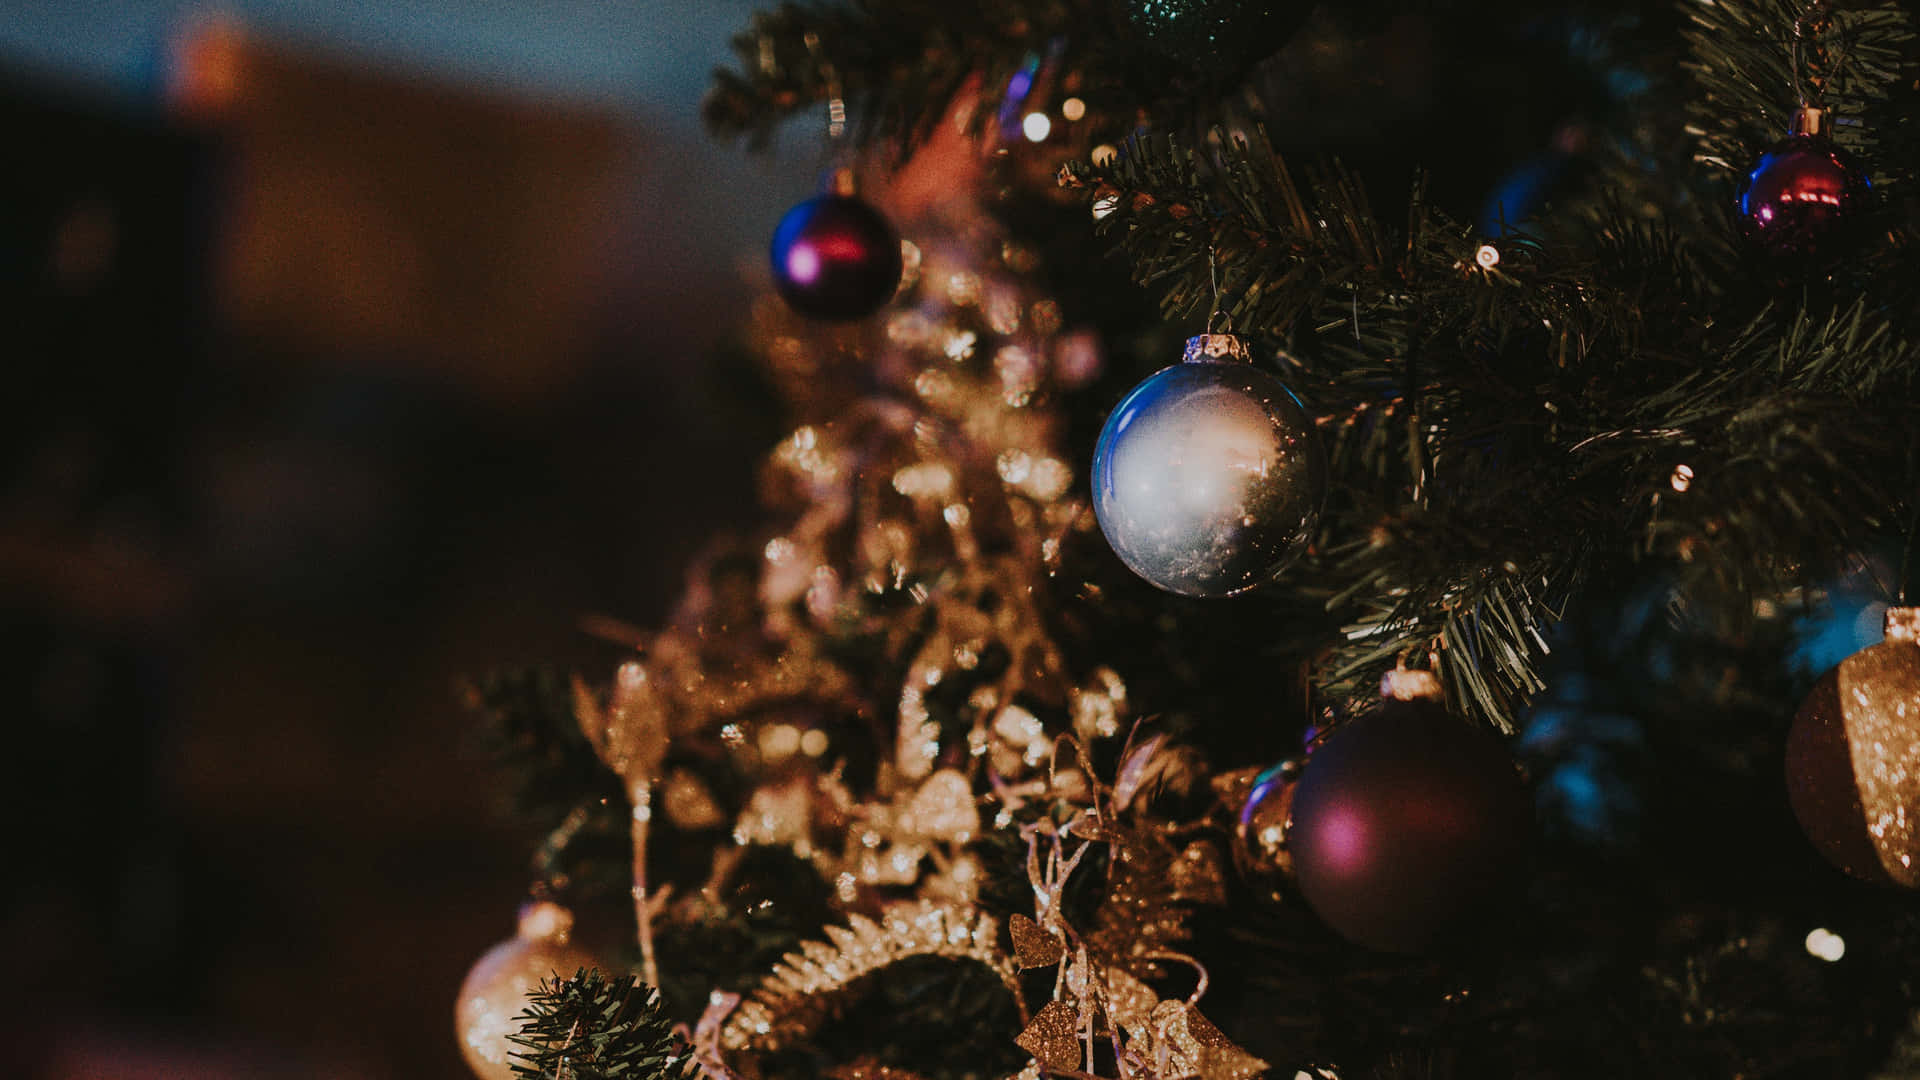 https://wallpapers.com/images/hd/tree-close-up-high-resolution-christmas-desktop-tk00b3vr2p0kv0b5.jpg